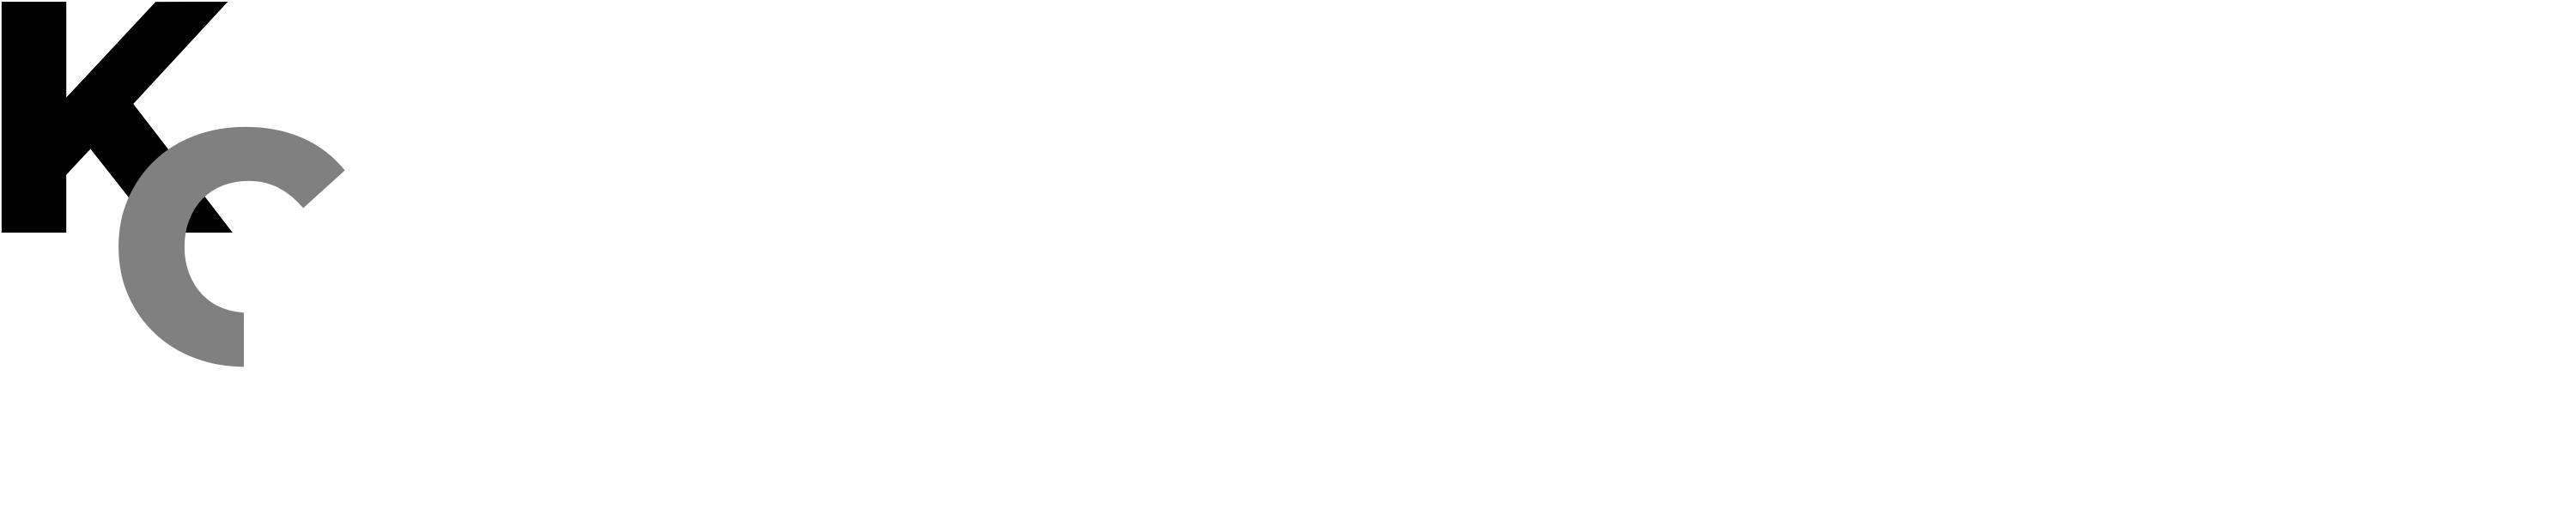 KODI Cable Network logo.